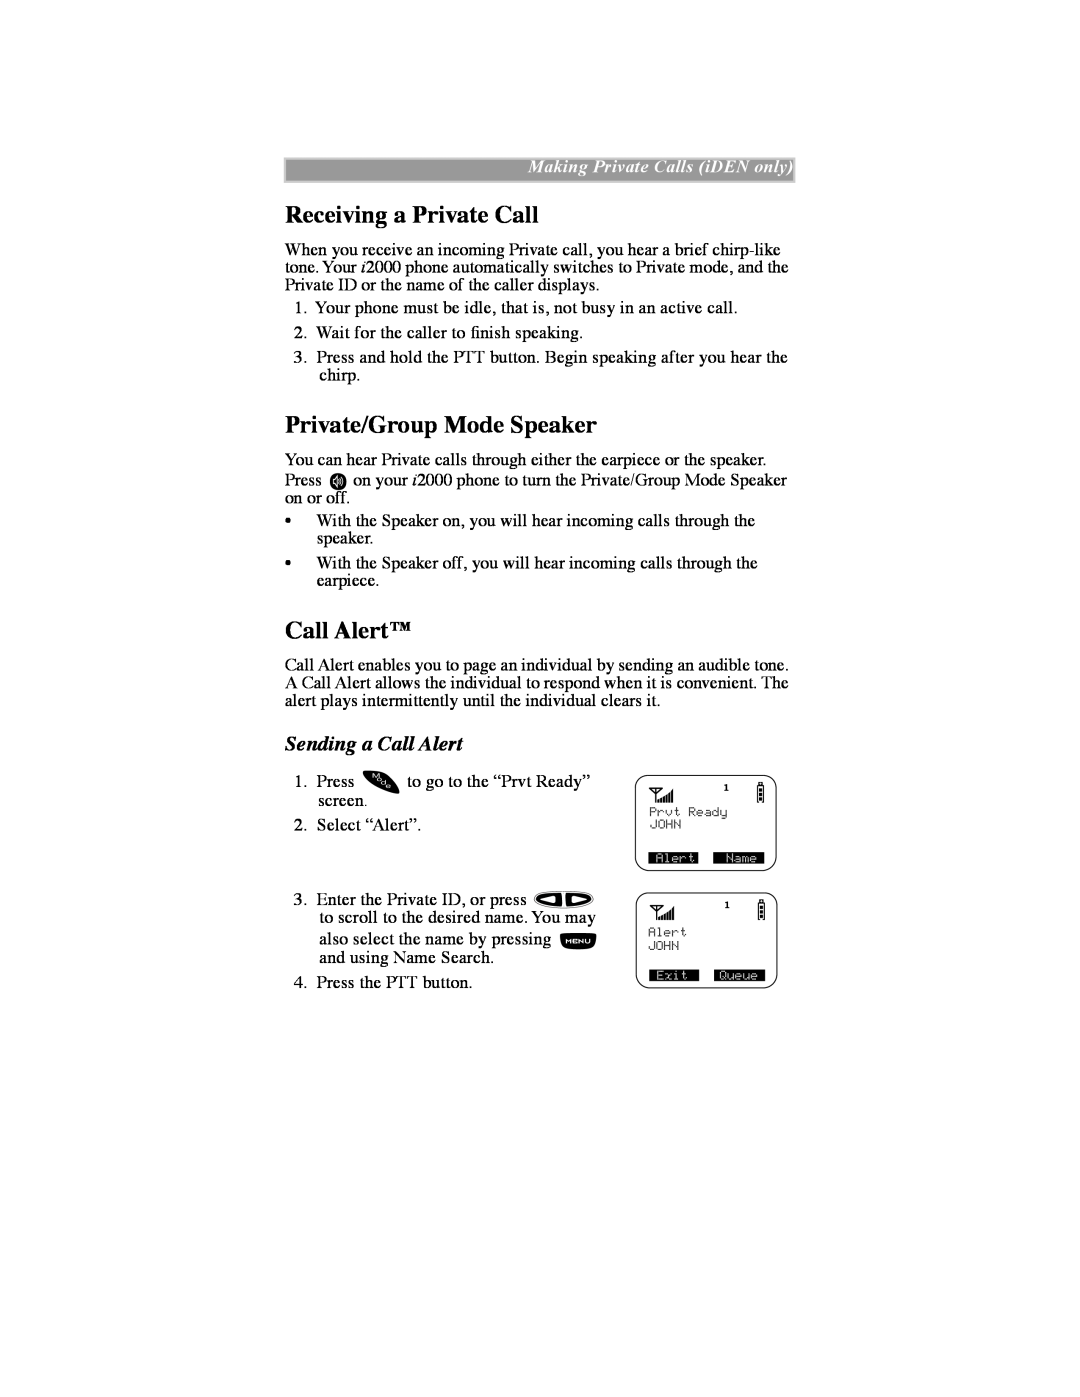 Motorola iDEN manual Receiving a Private Call, Private/Group Mode Speaker, Call Alertª, Sending a Call Alert 